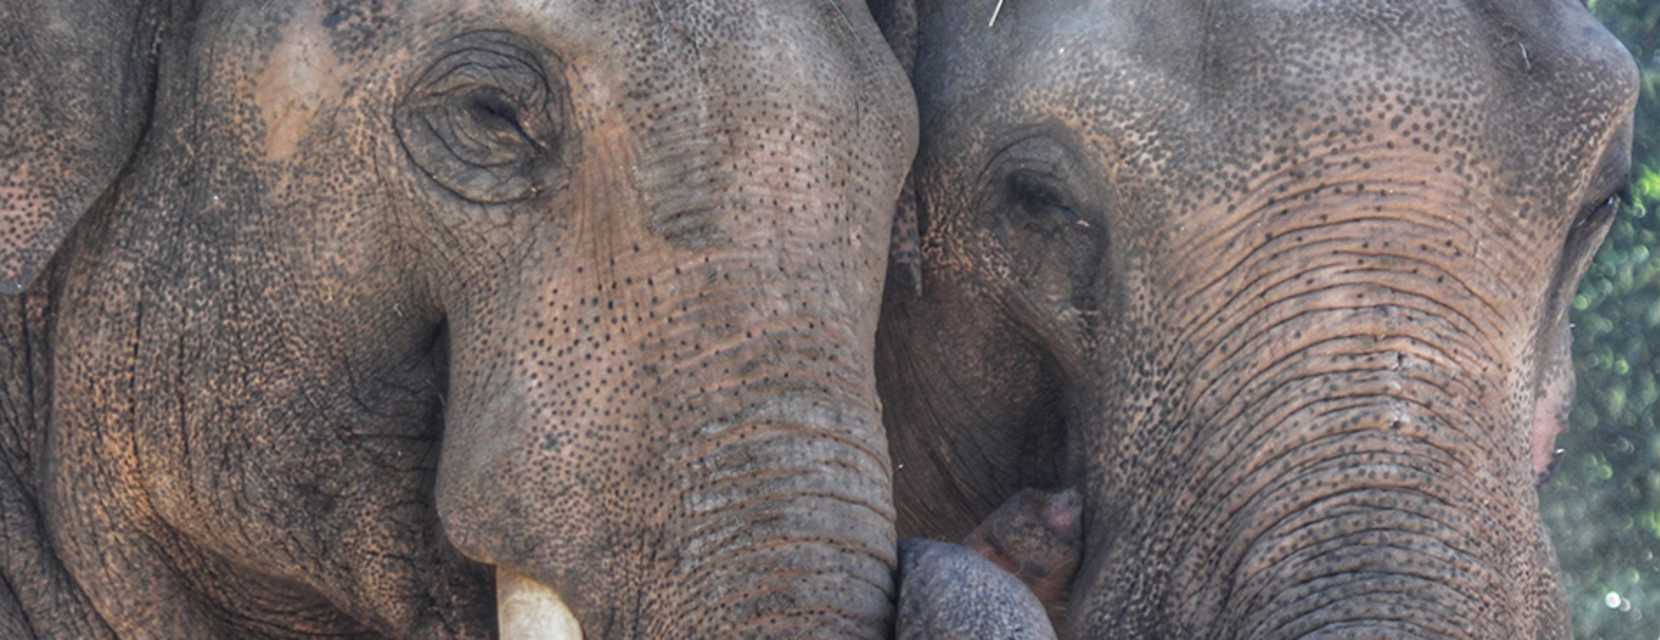 Denver Zoo's elephants